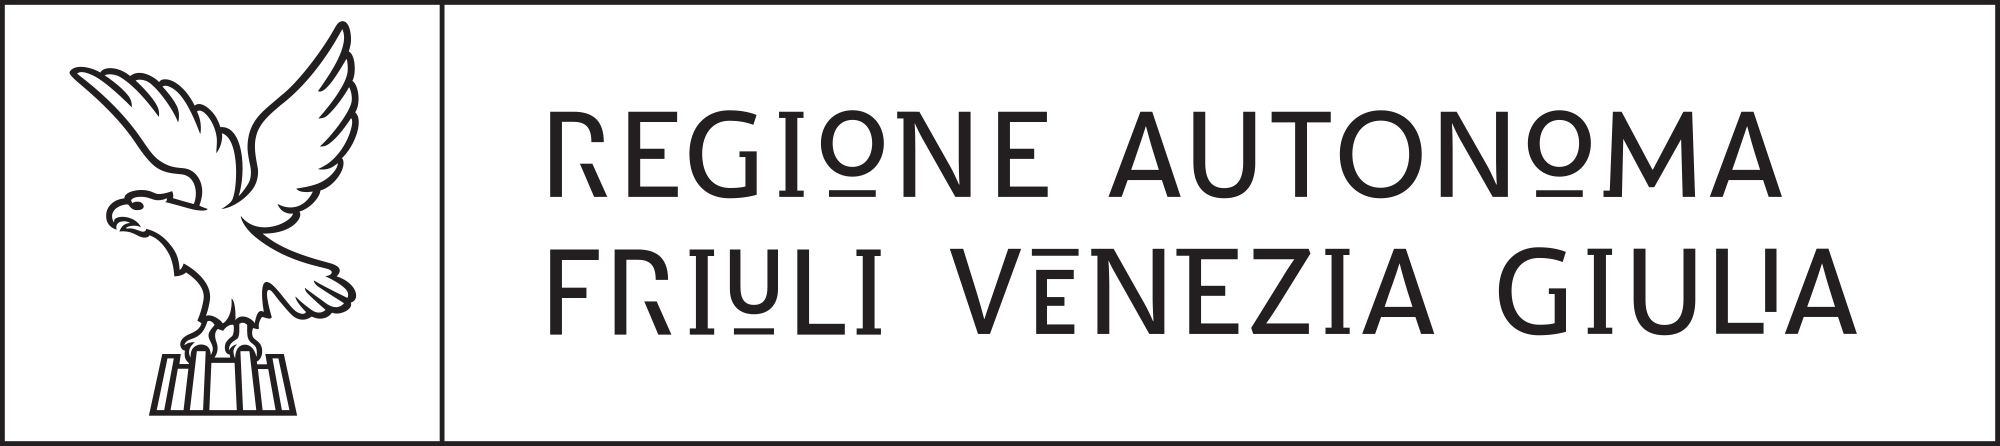 Fvg logo Regione Autonoma Friuli Venezia Giulia